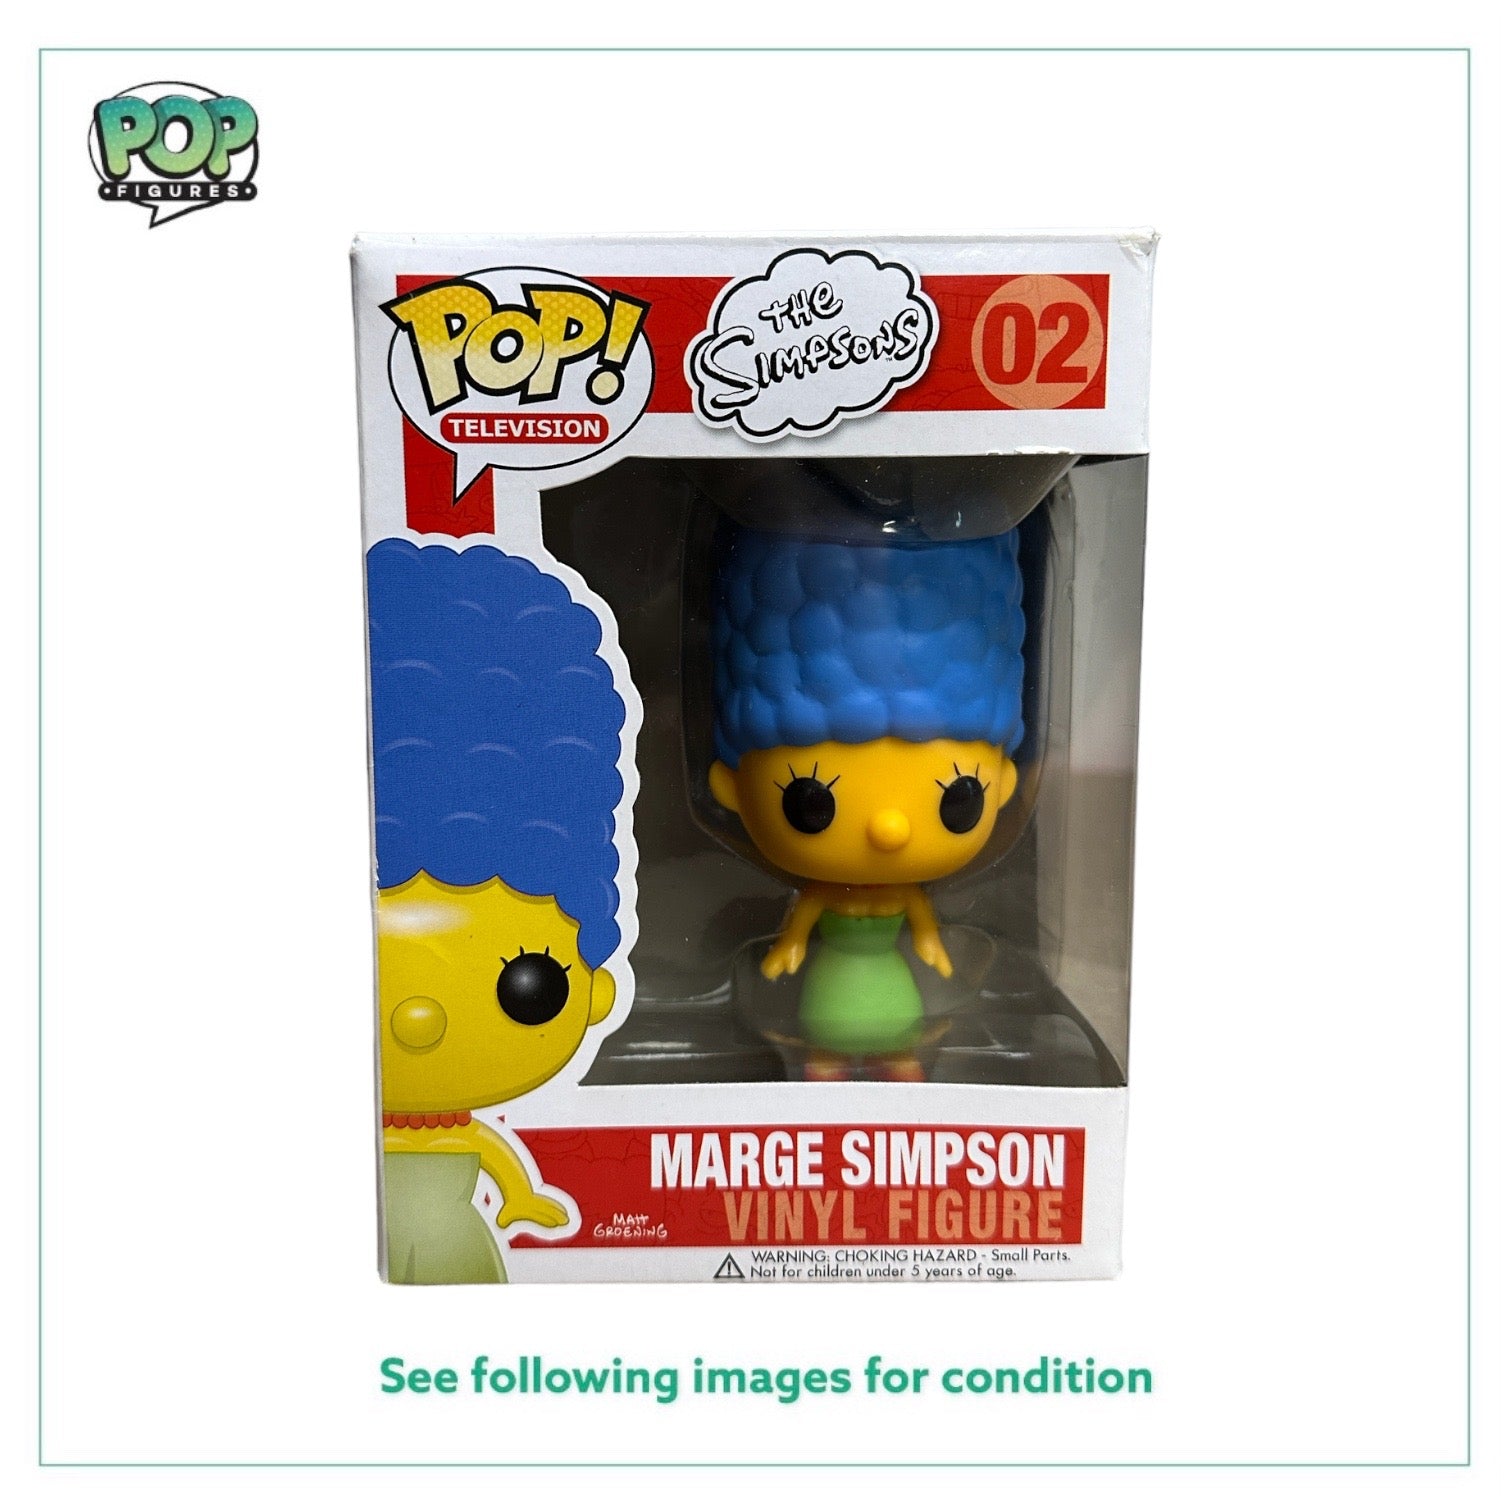 Marge Simpson #02 Funko Pop! - The Simpsons - 2011 Pop! - Condition 7/10